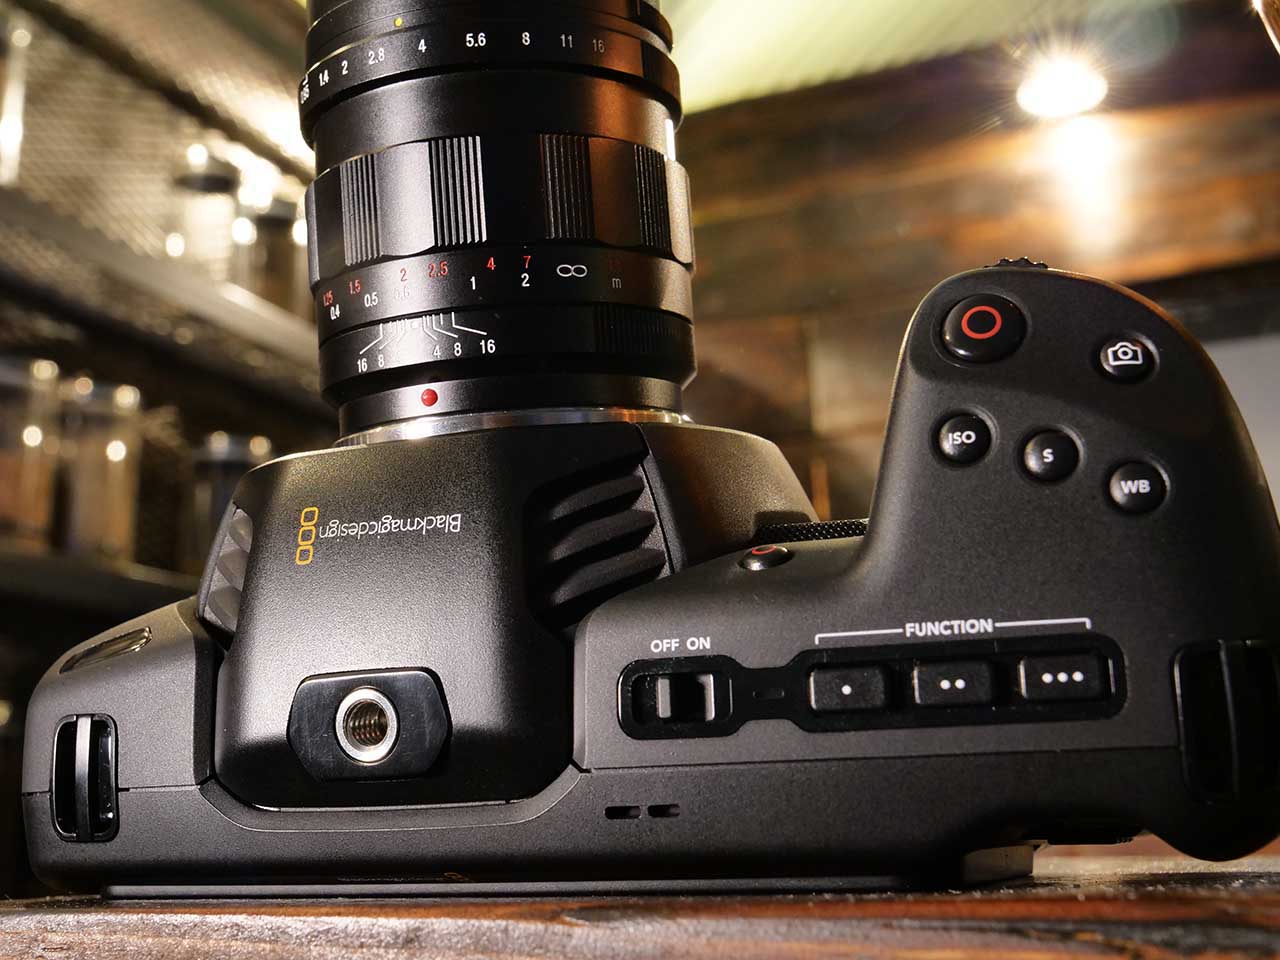 Blackmagic adds Raw to Pocket Cinema Camera 4K, launches URSA Mini Pro 4.6K G2